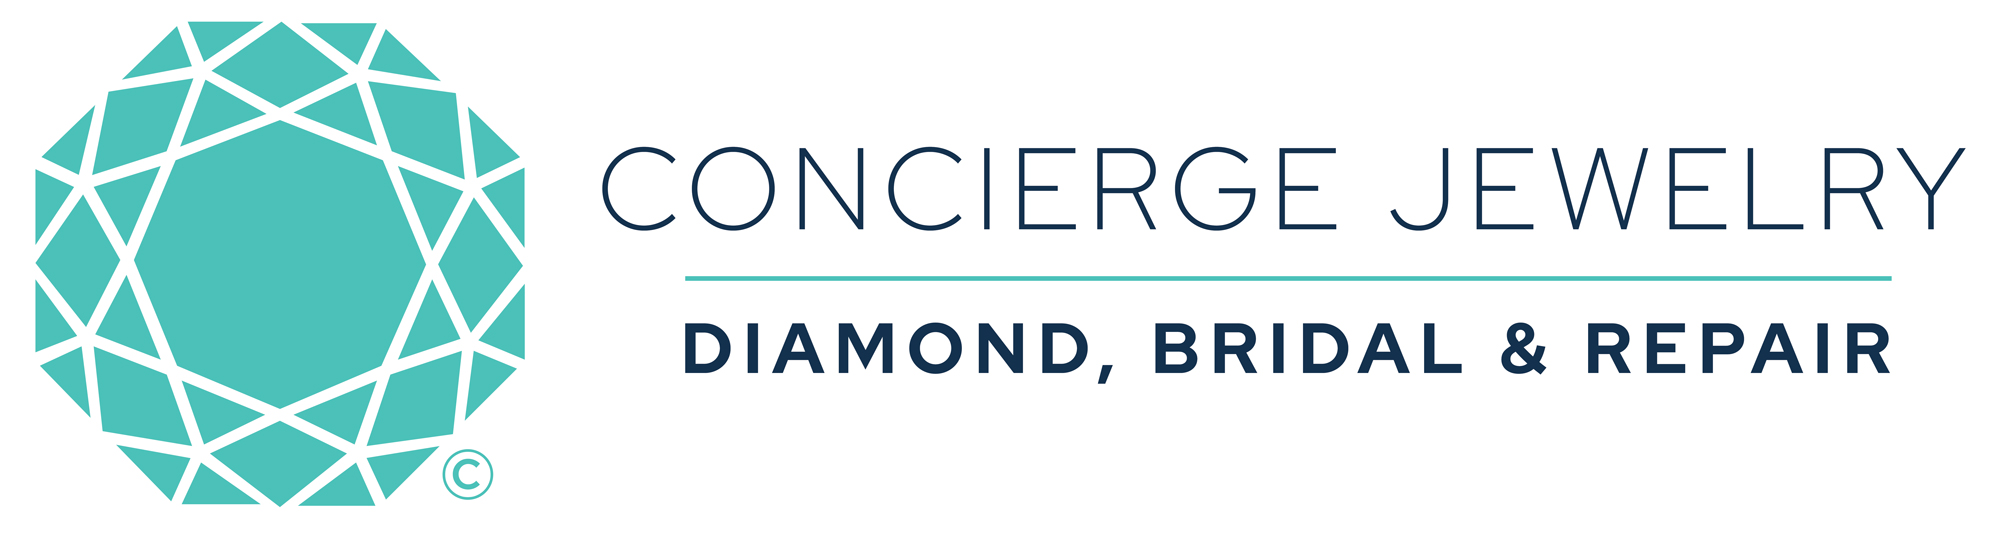 Concierge Jewelry, Diamond, Bridal and Repair logo